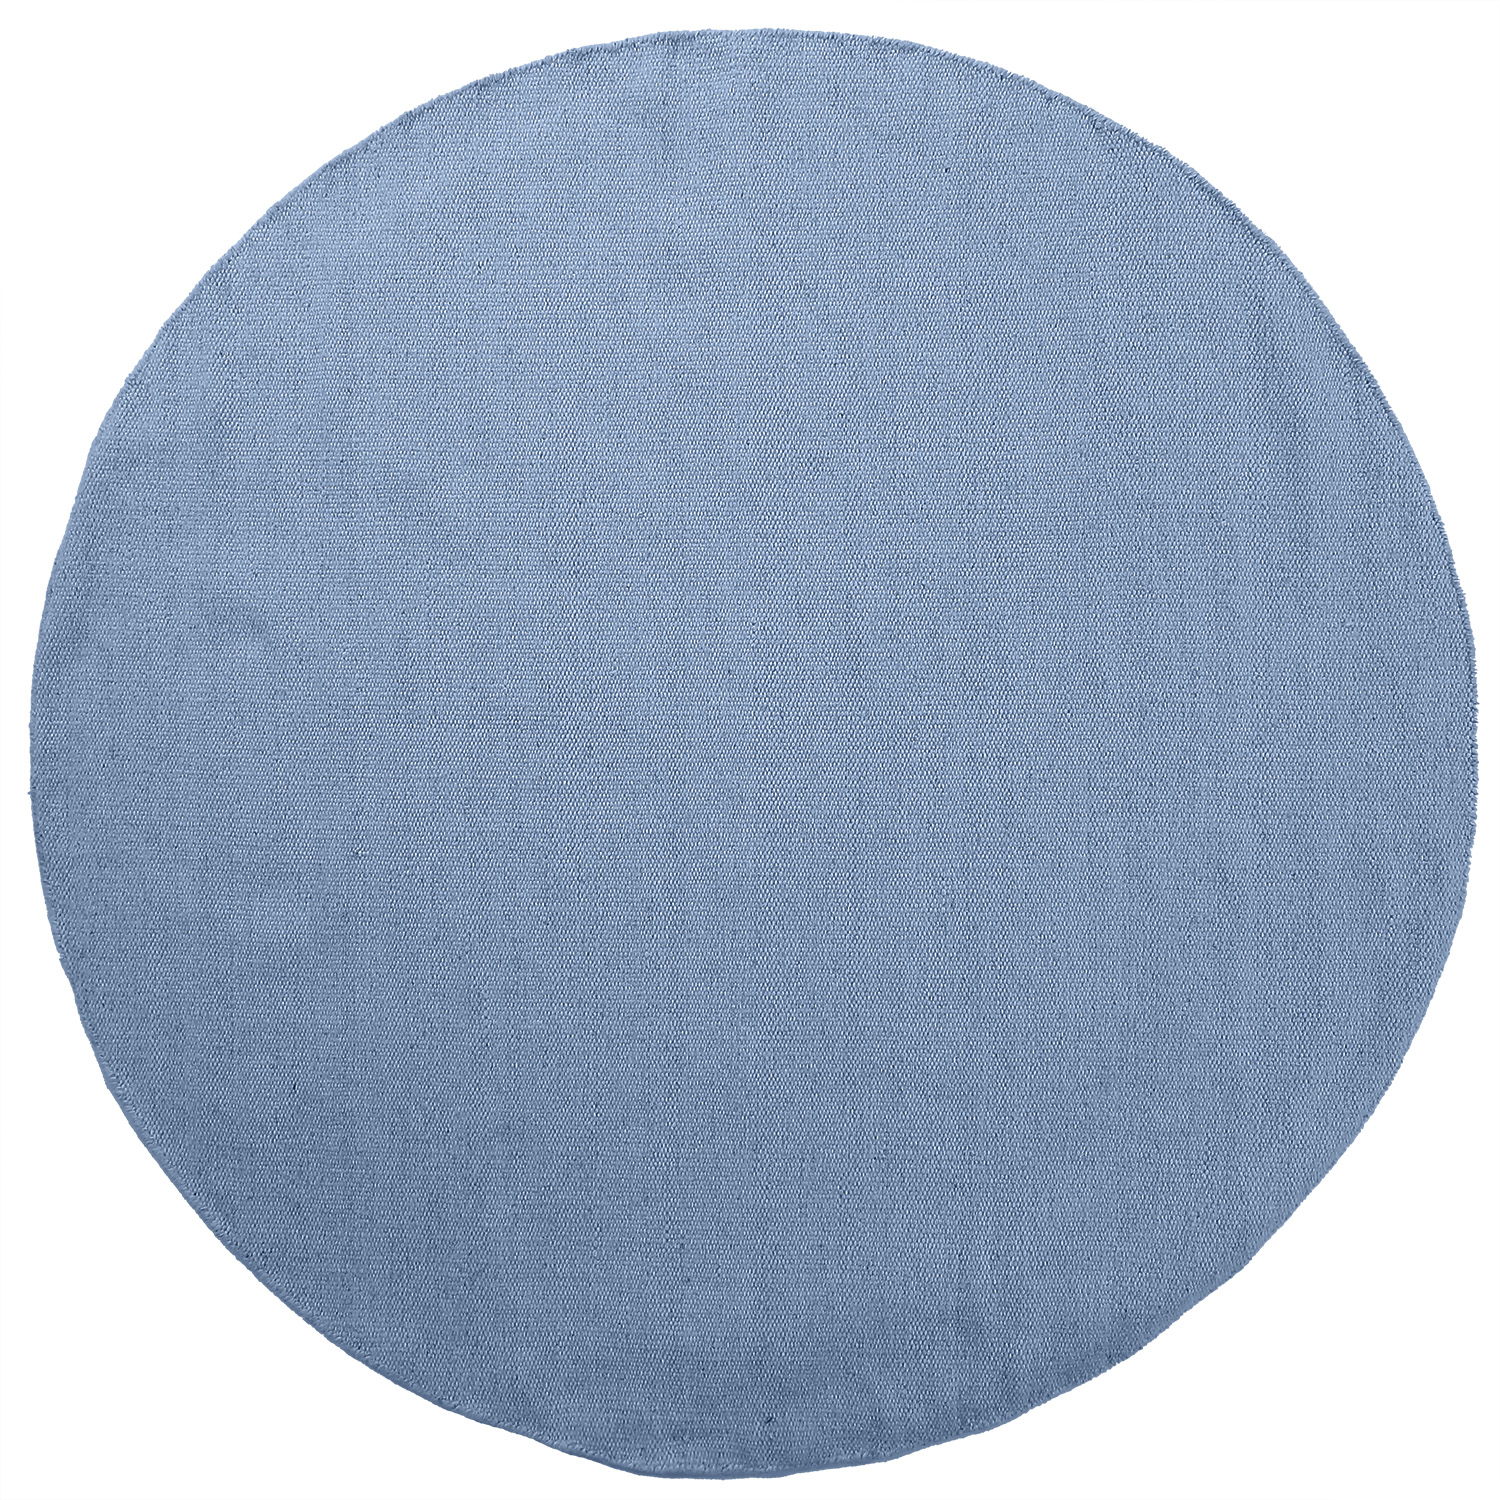 Round rug - Hamilton (Faded Denim)